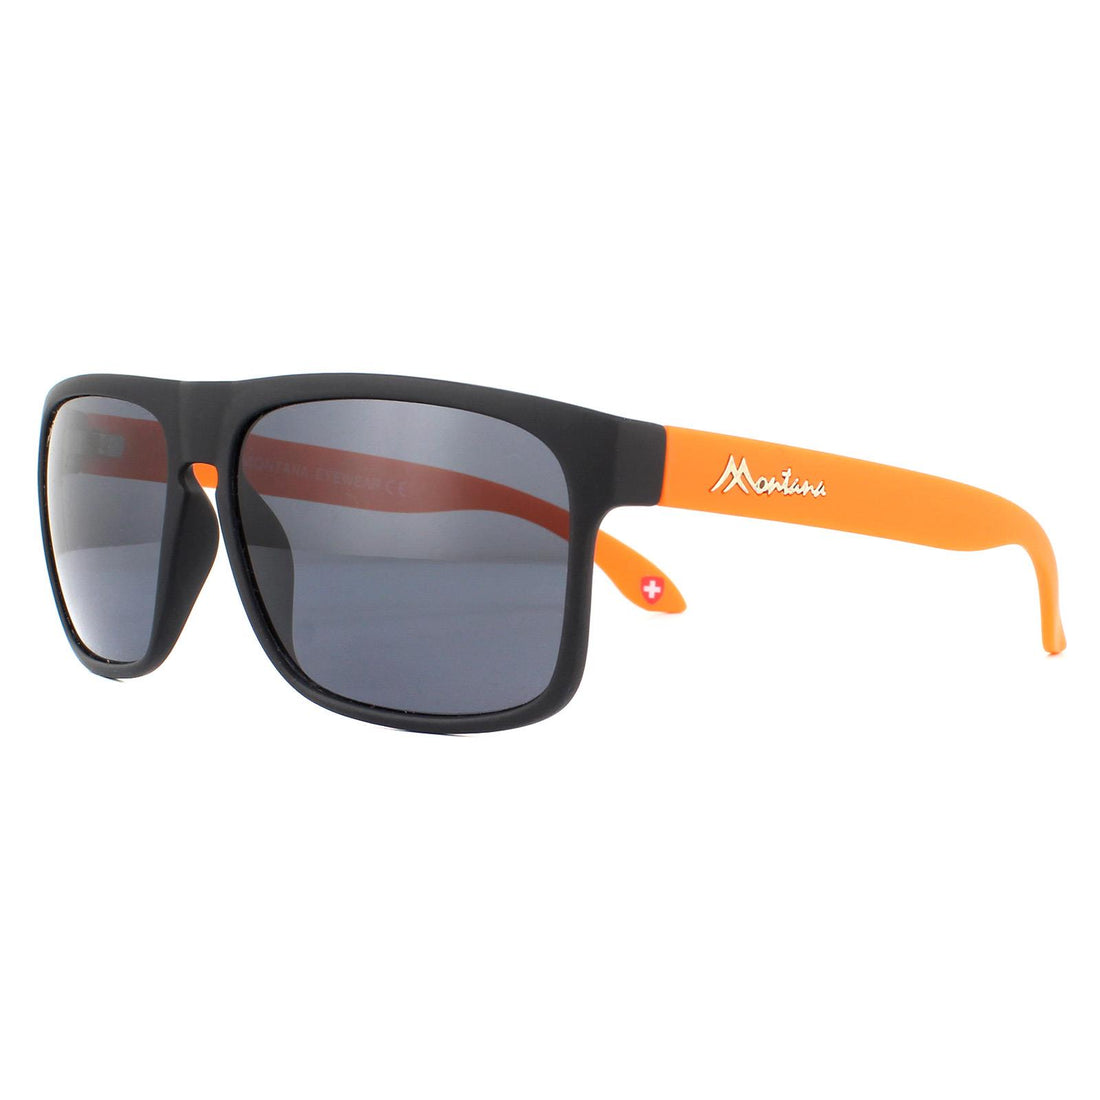 Montana Sunglasses MP37 D Black with Orange Rubbertouch Black Polarized